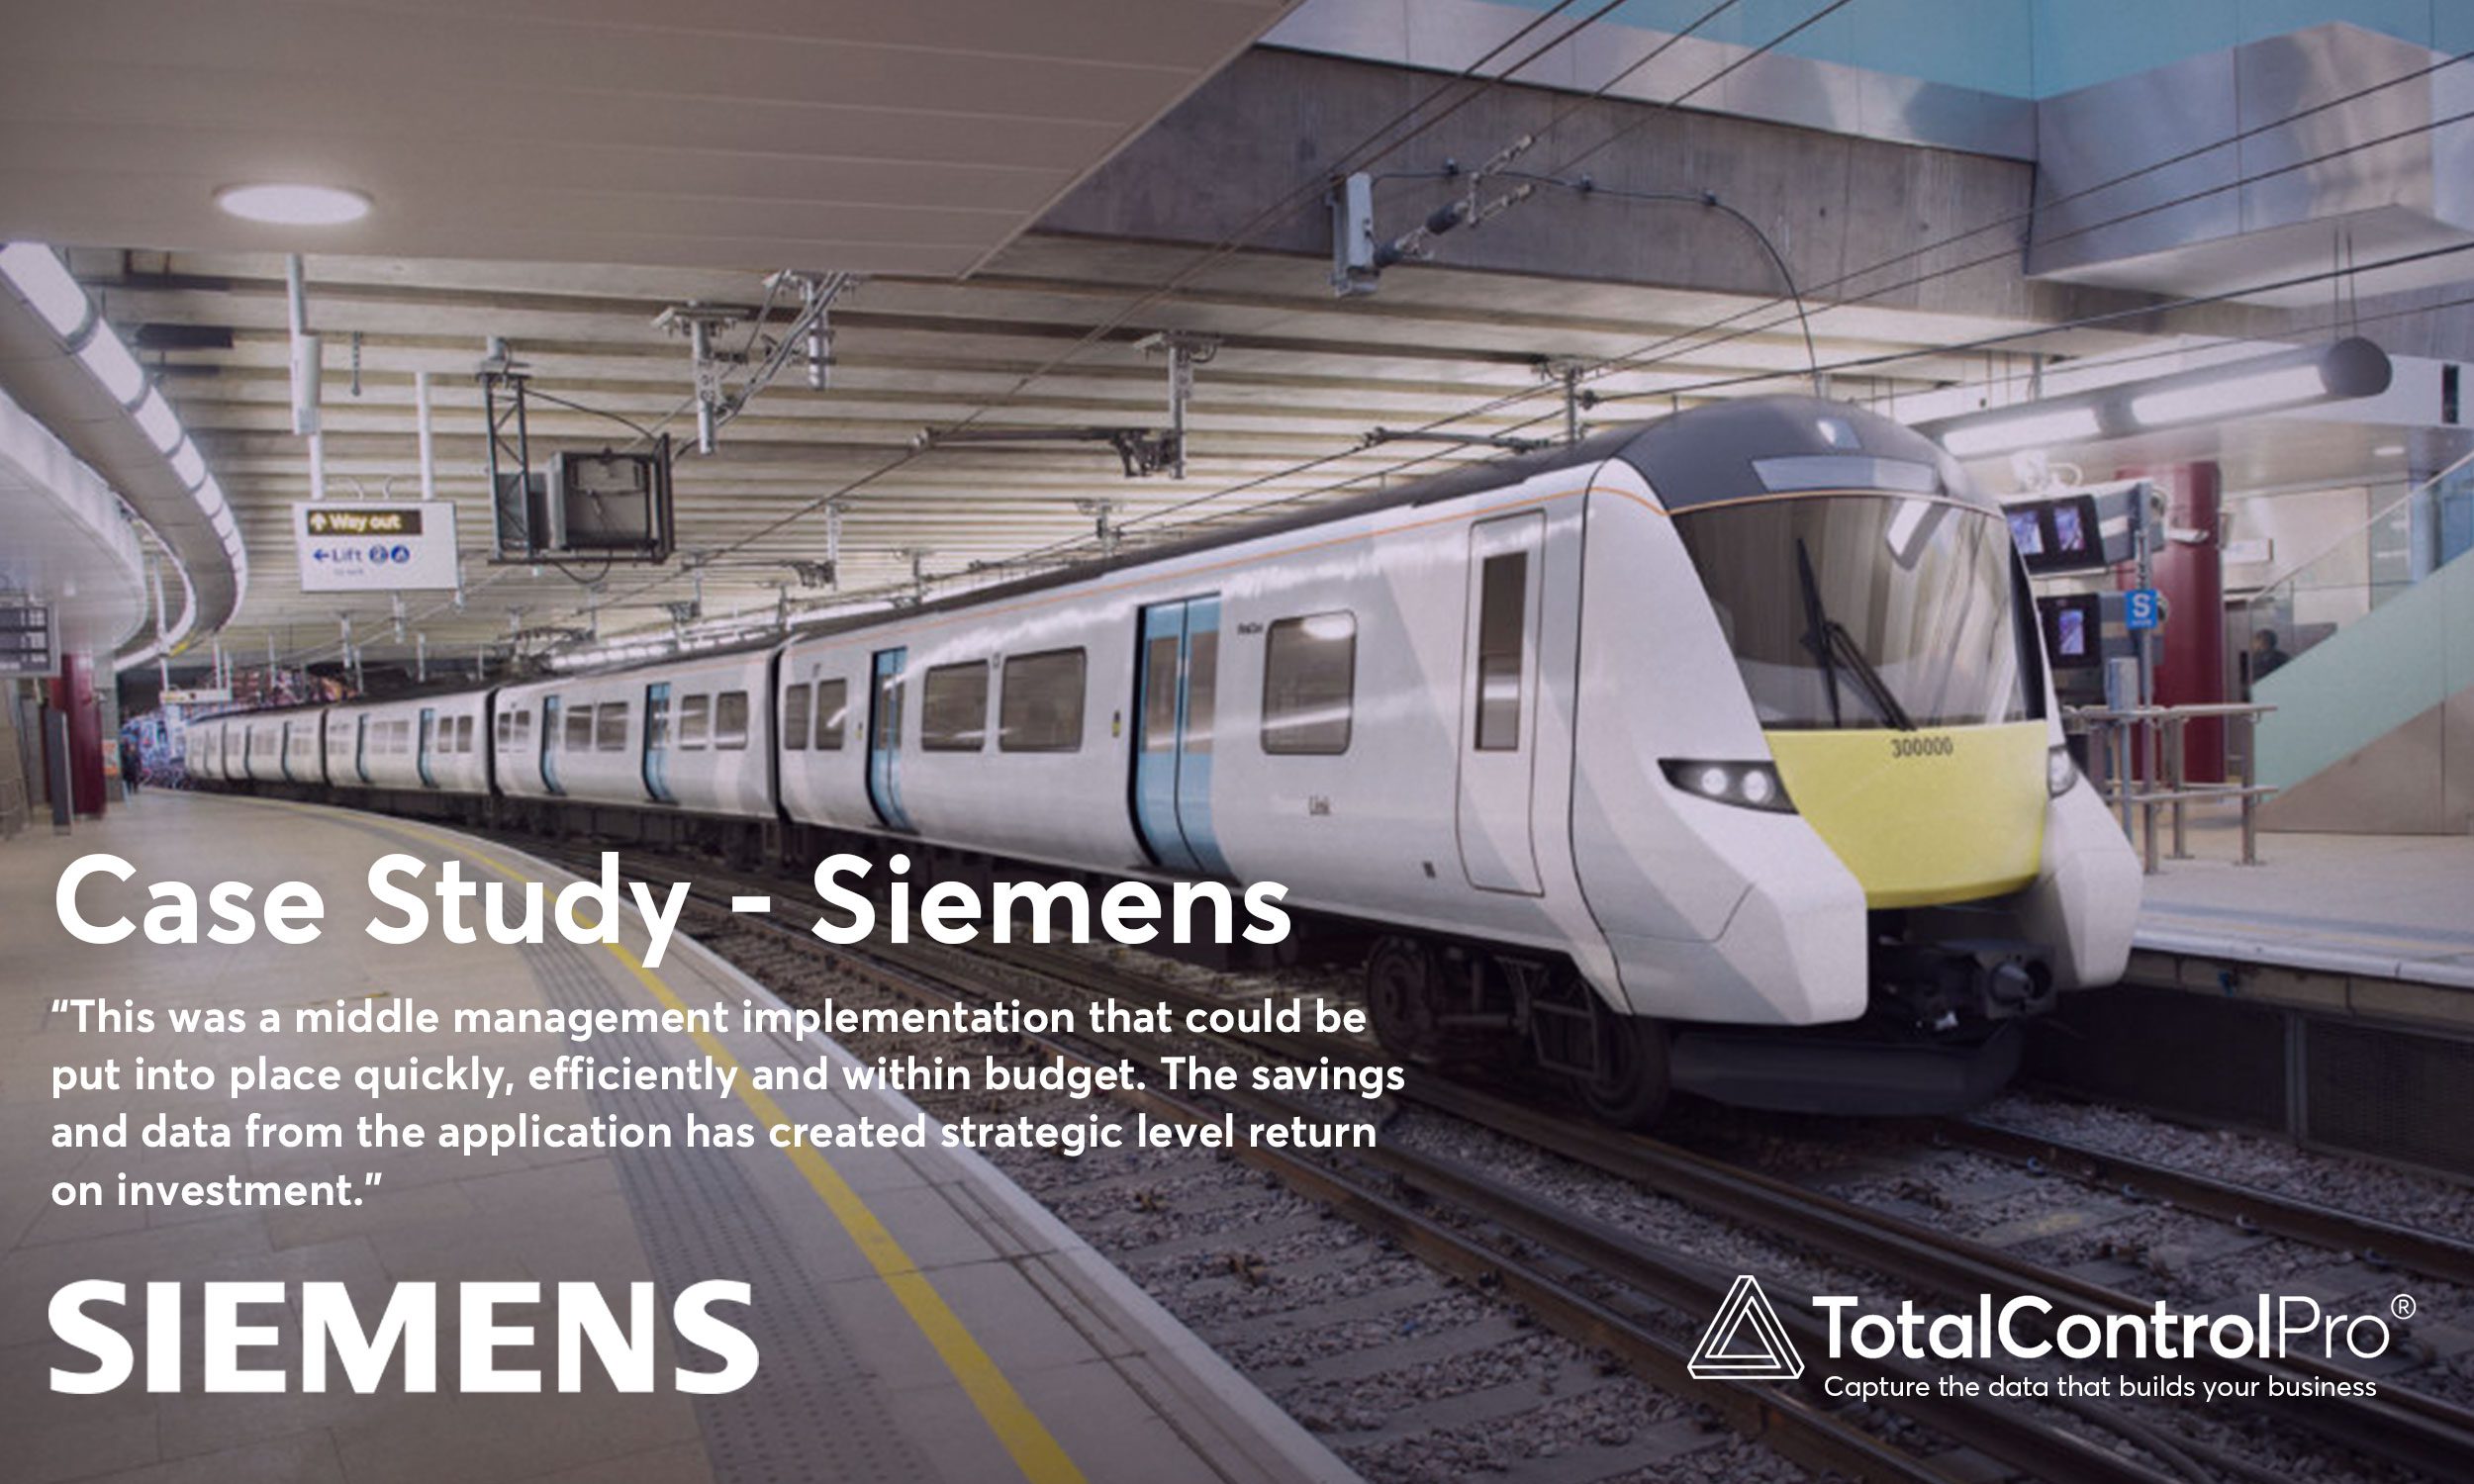 Siemens-case-study-totalcontrolpro.jpg